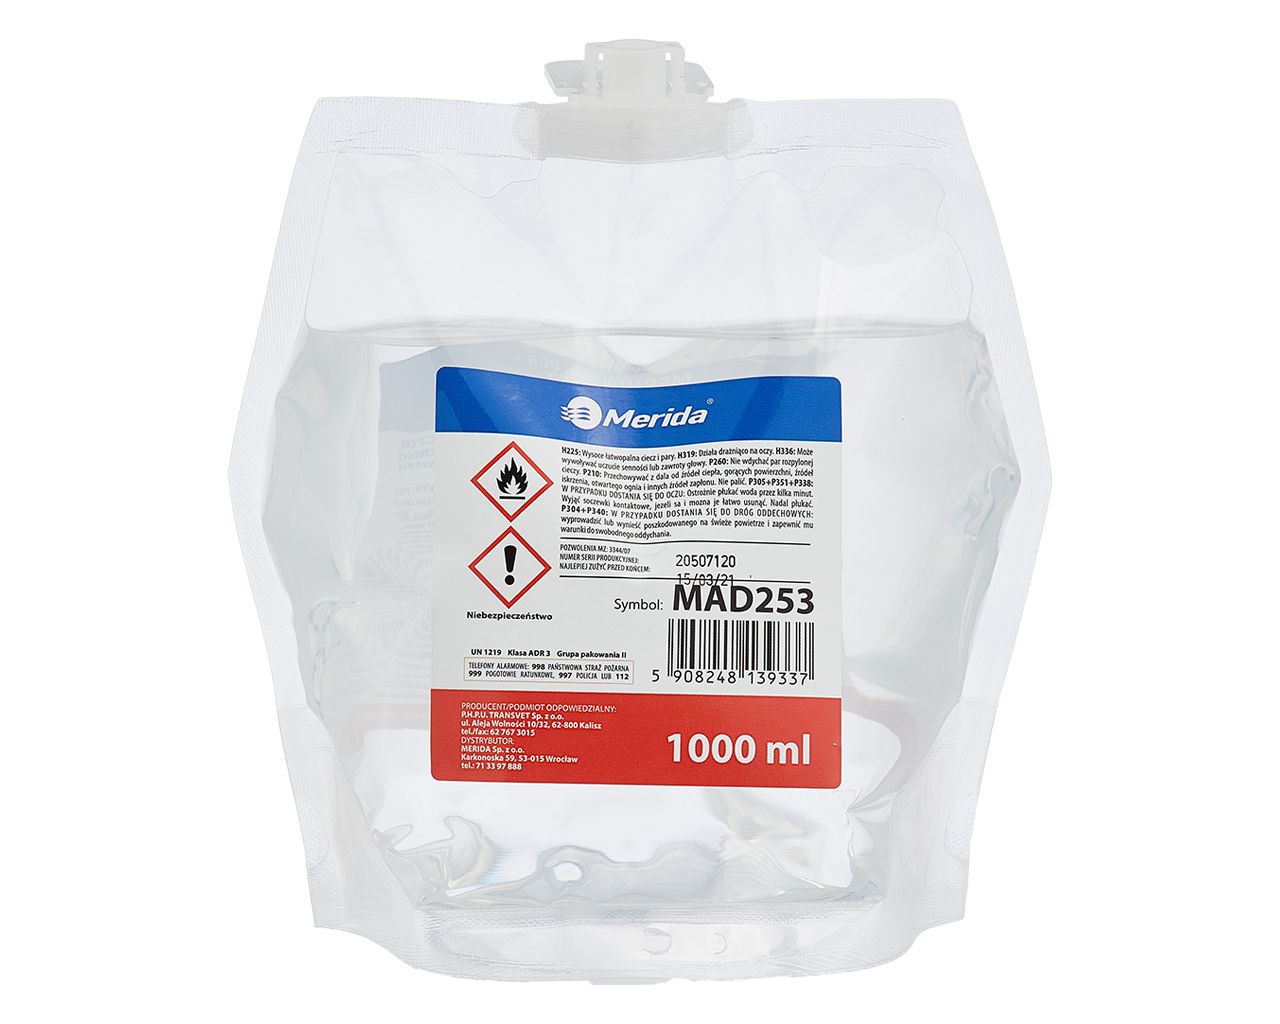 MERIDA POLANA DDR + liquid hand disinfectant, 1000 ml disposable pouch for: DTR401, DSM406, DSP406 spray dispenser